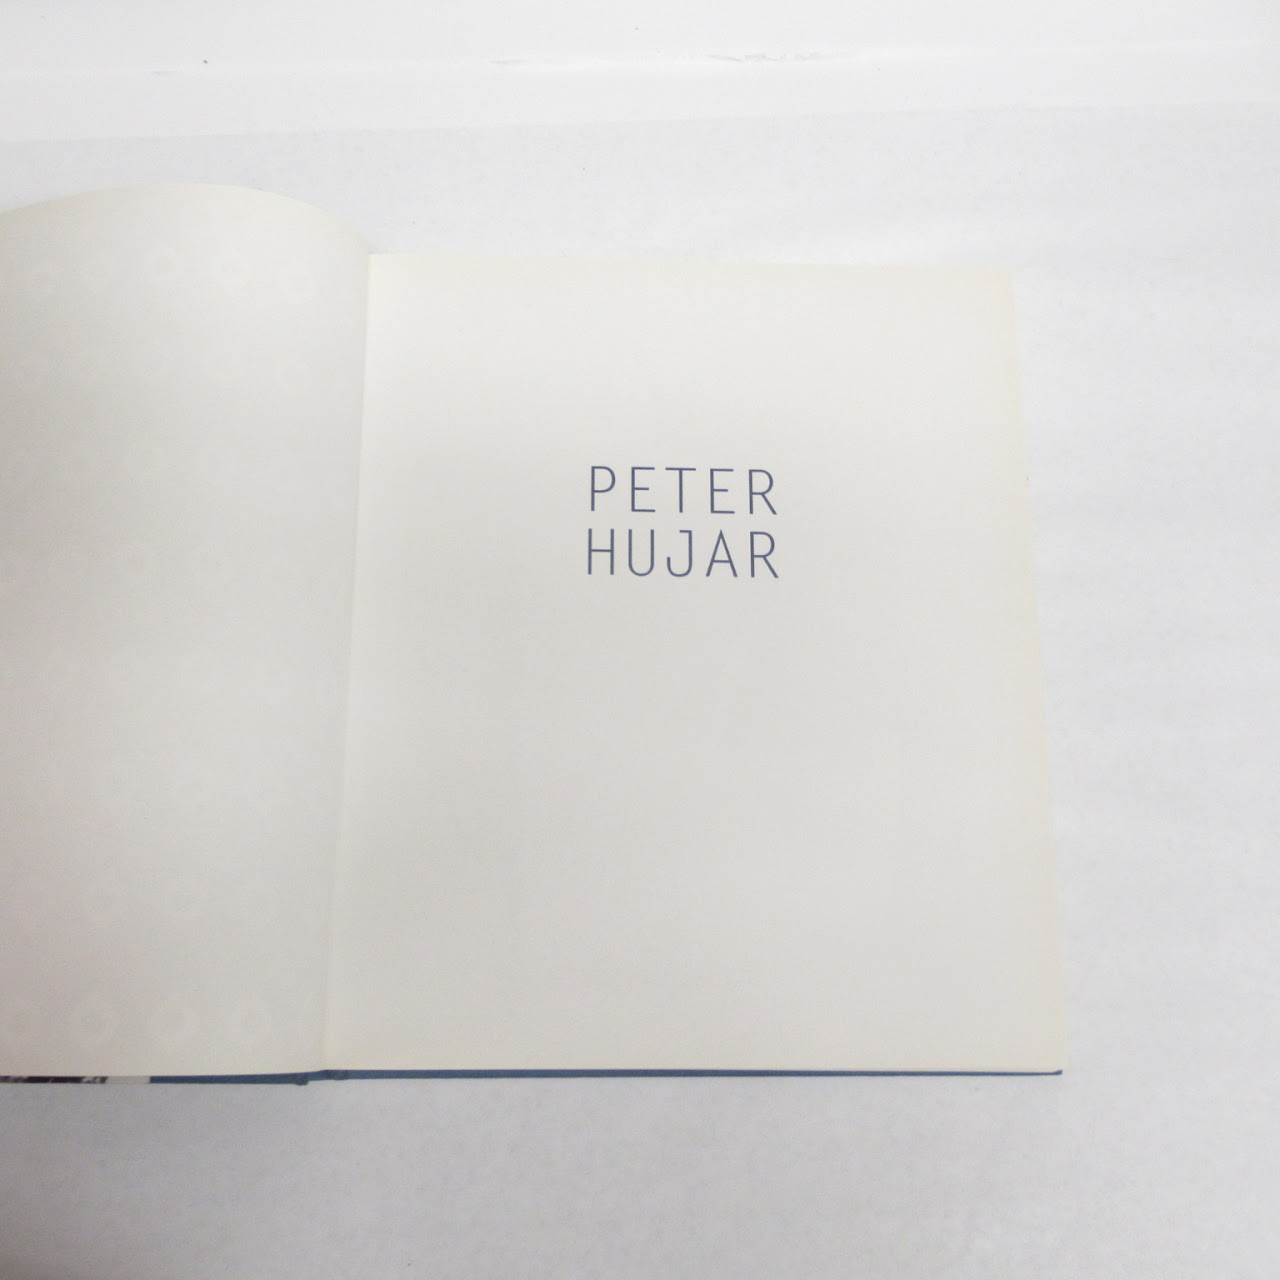 'Speed of Life' Peter Hujar Hardcover Book